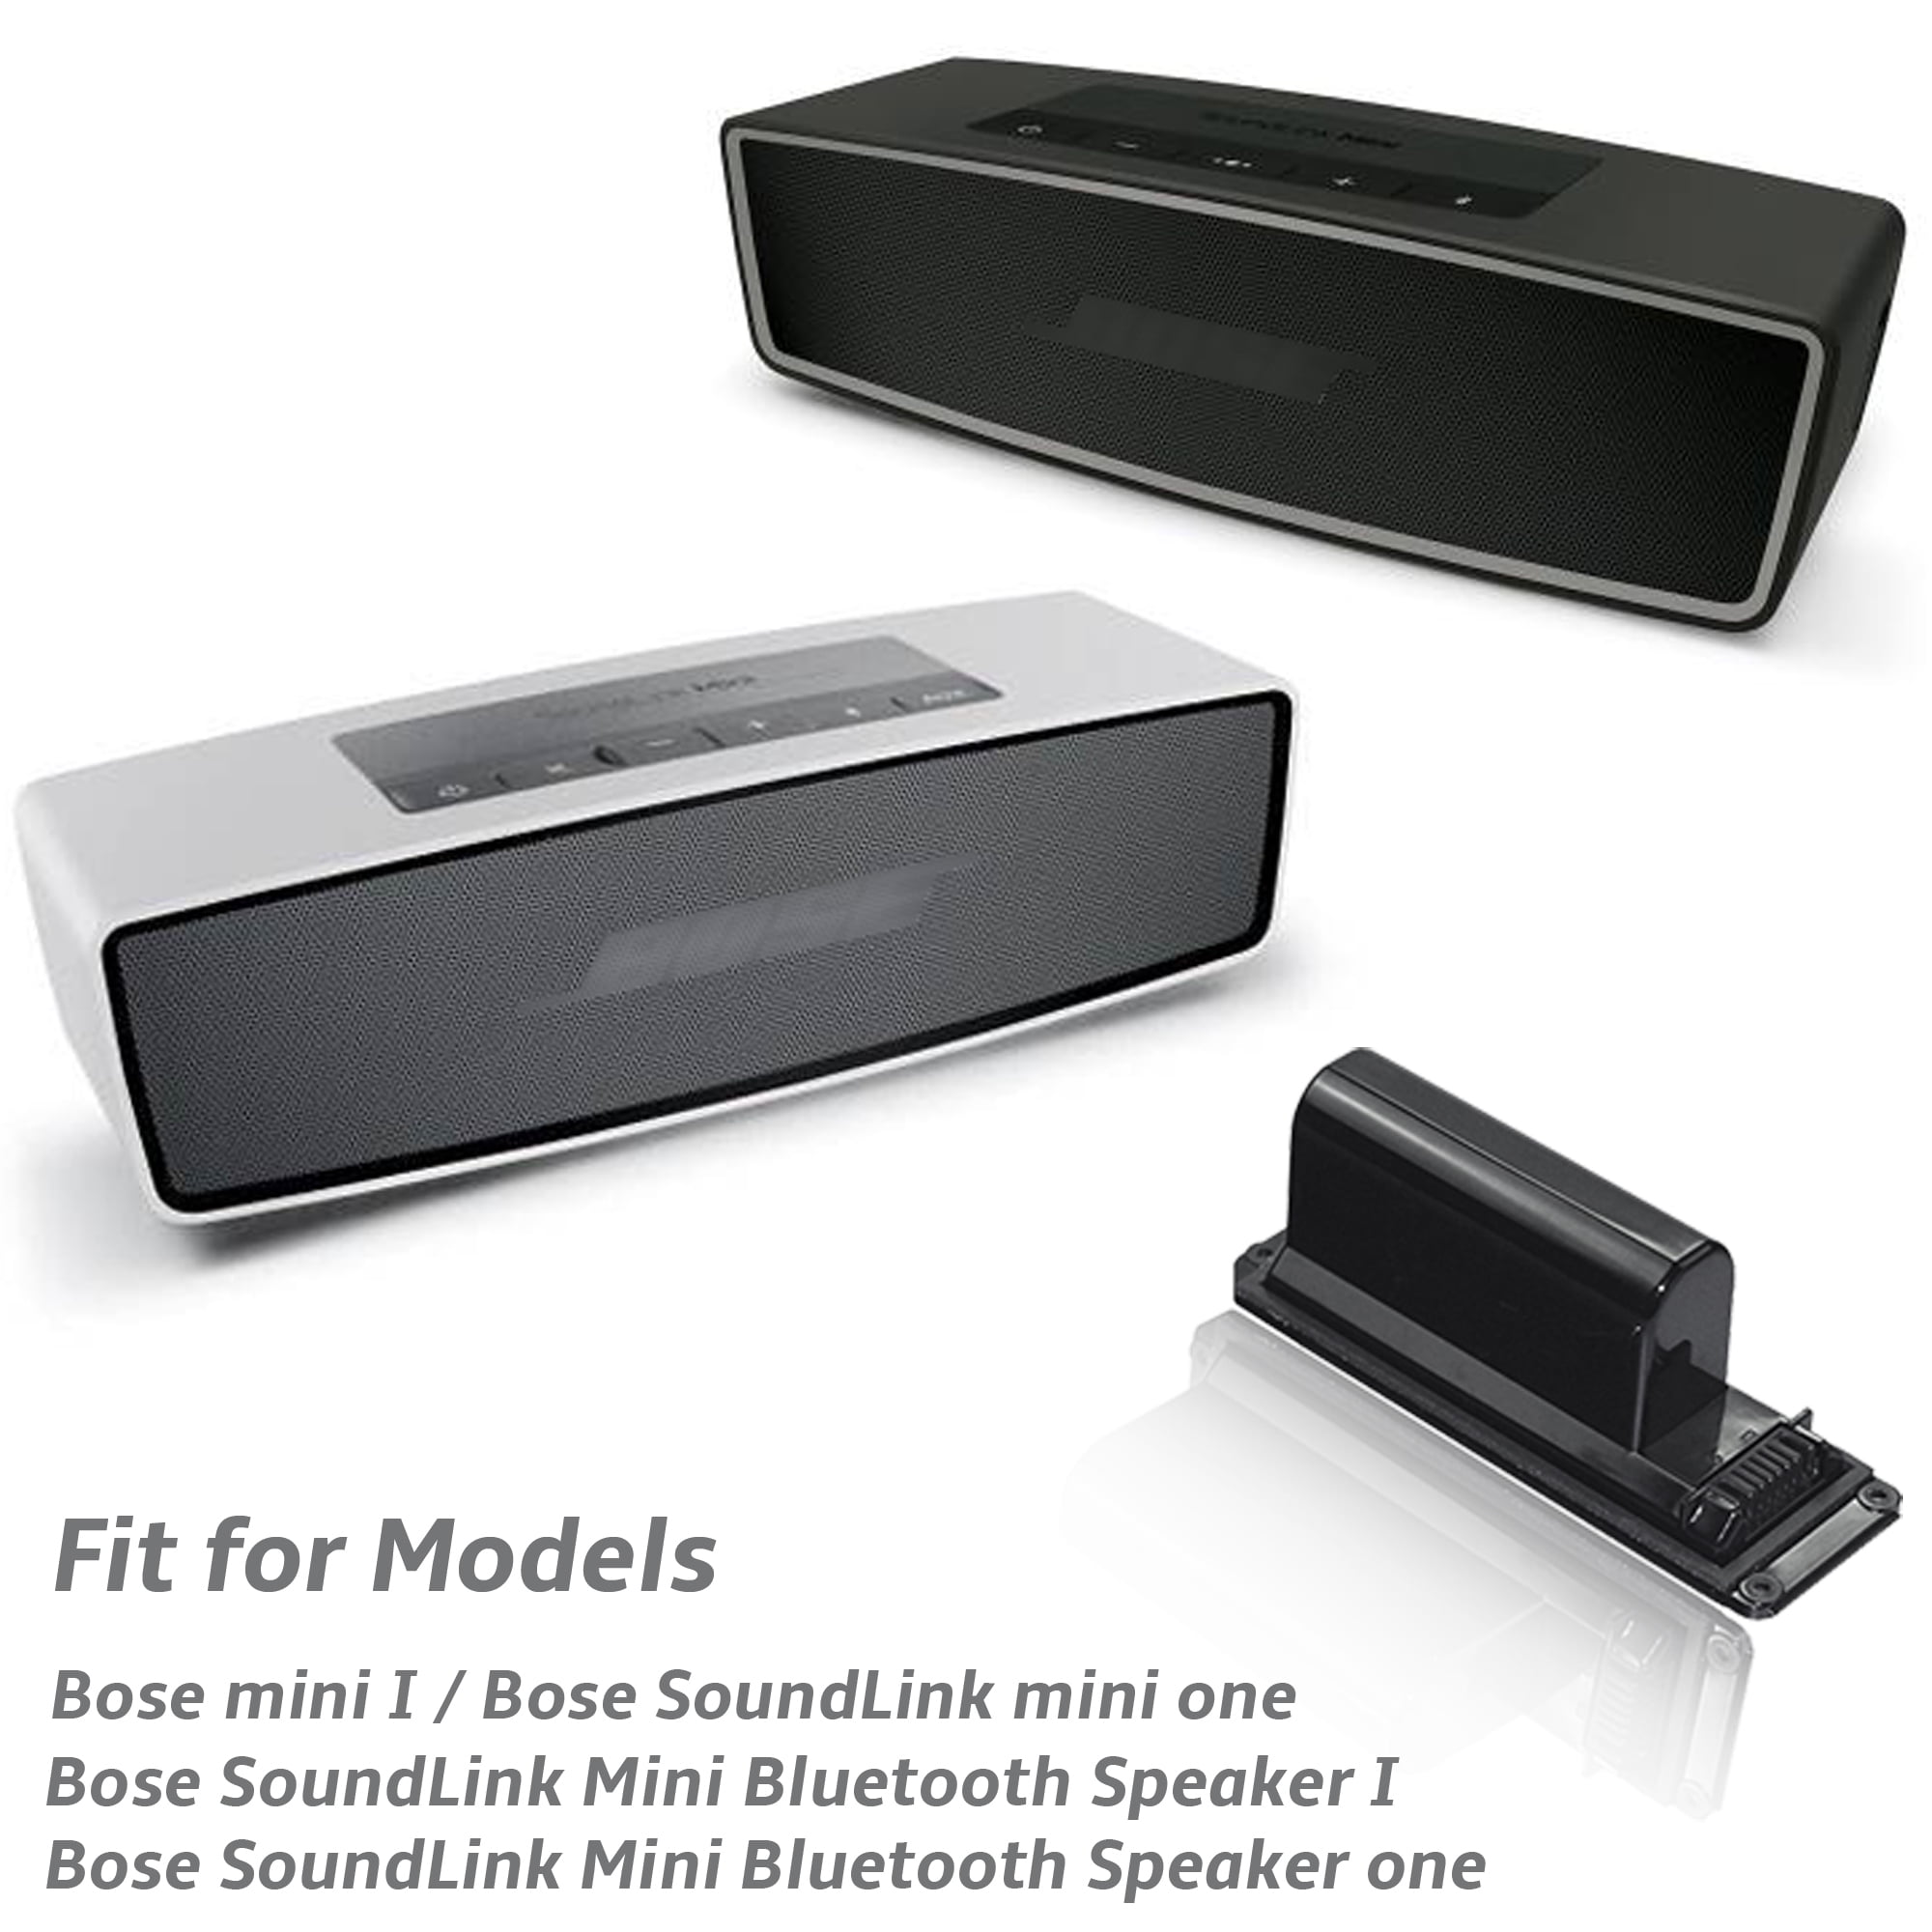 Bose SoundLink Mini II Bluetooth speakers - Black